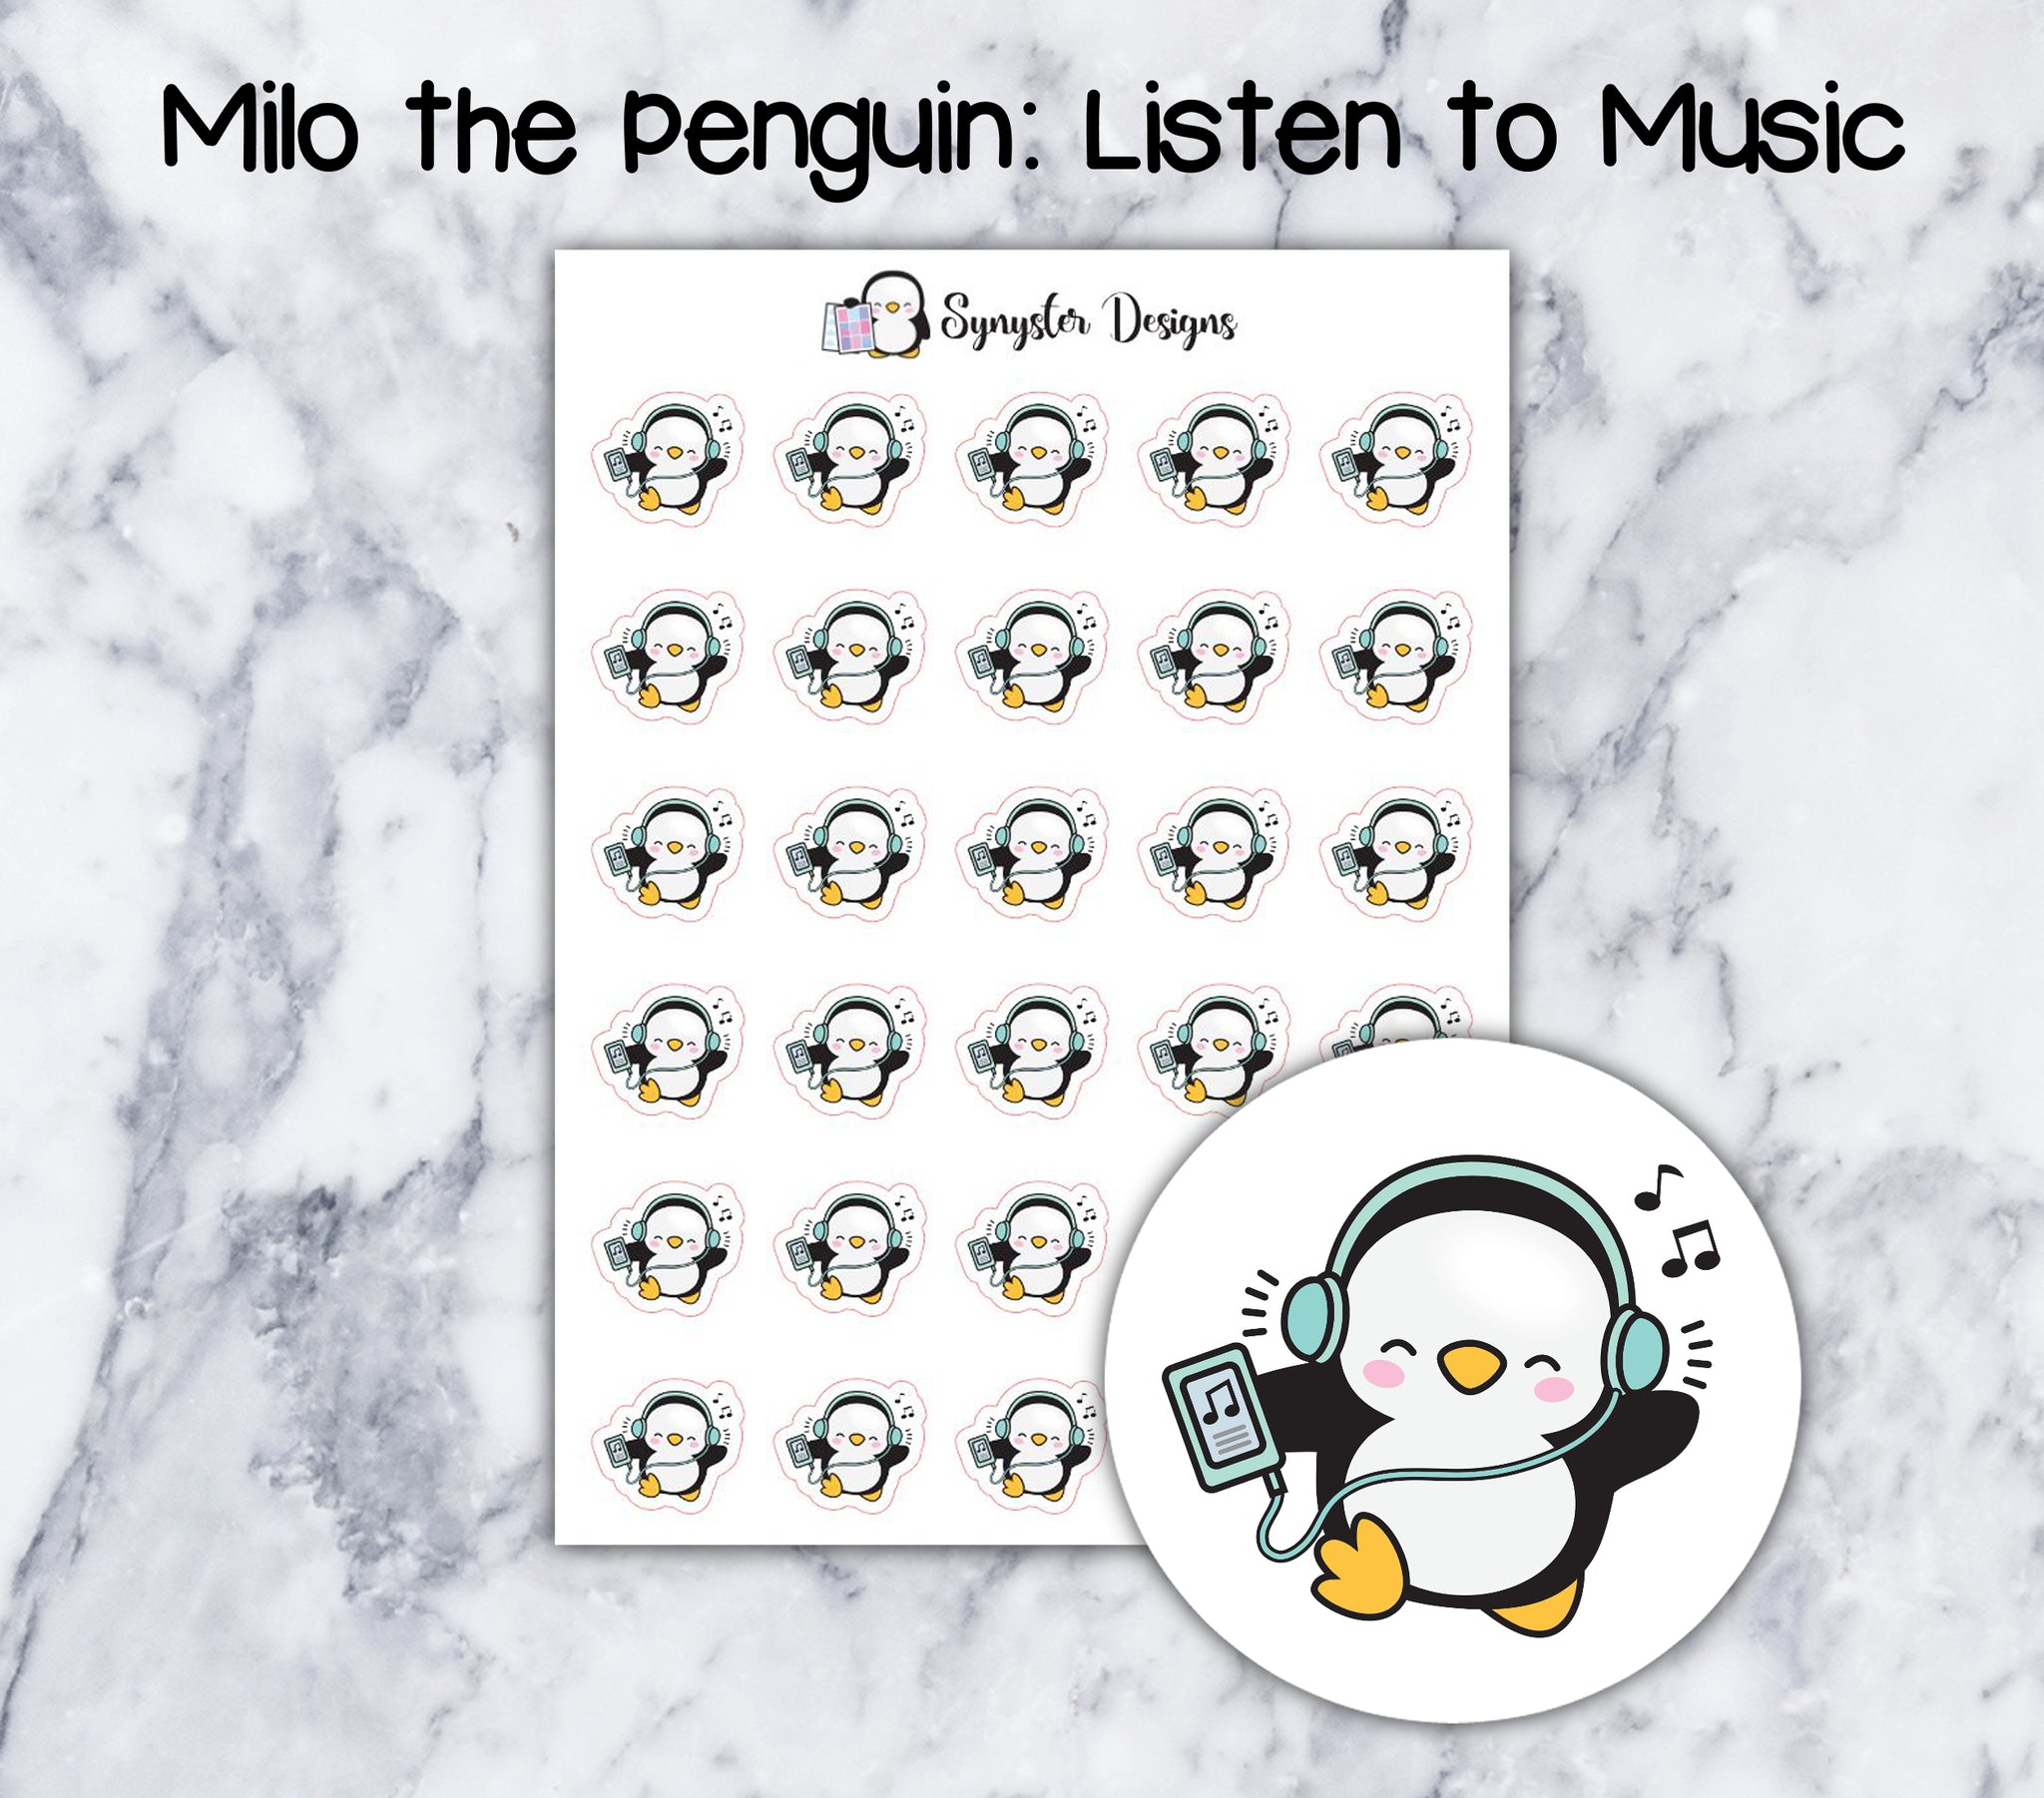 Listen to Music Milo the Penguin